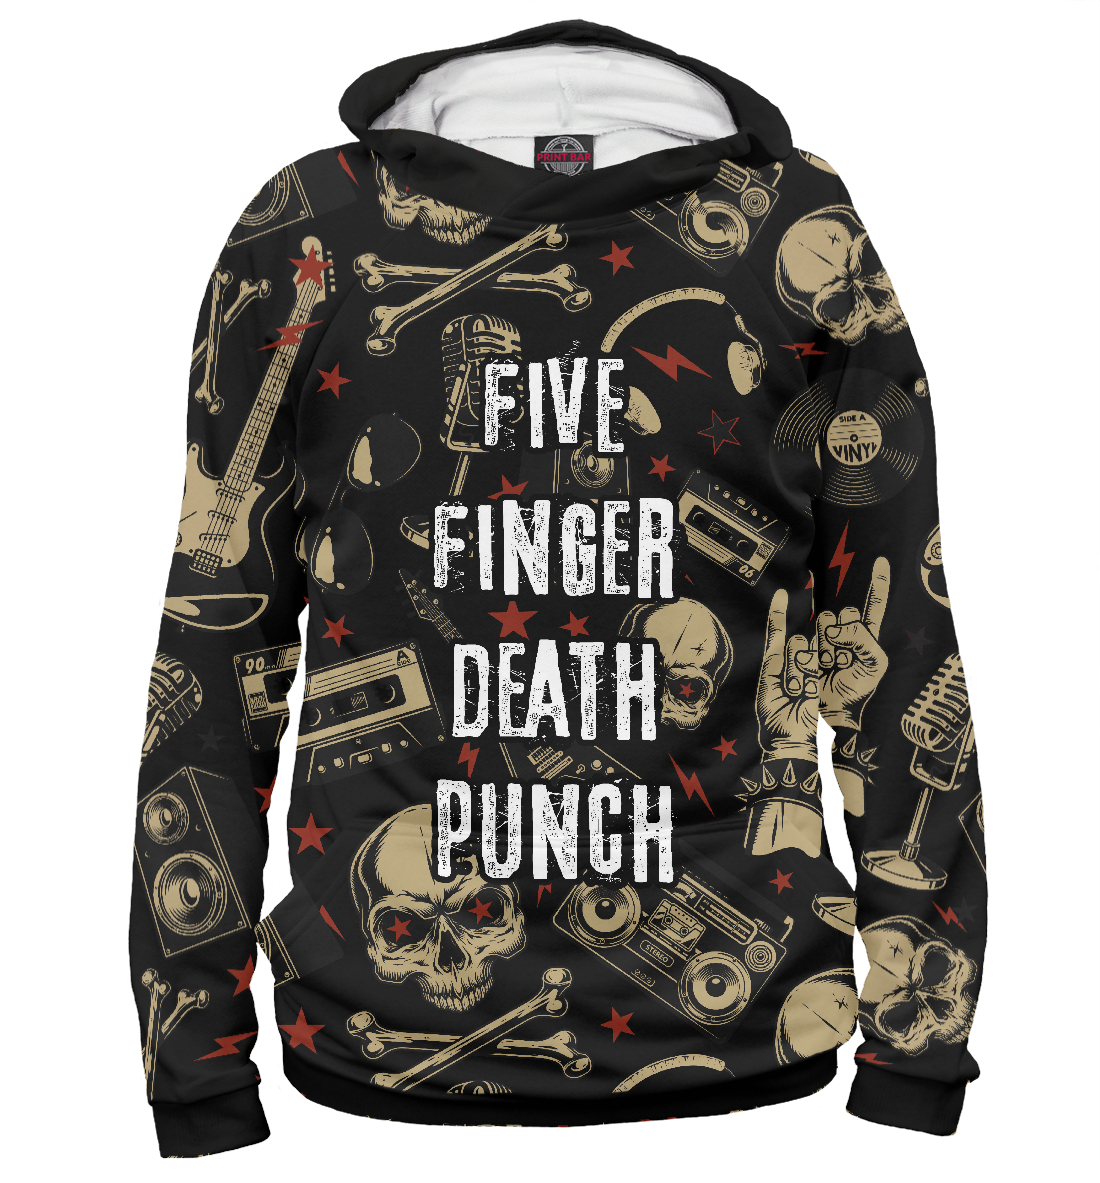 

Five Finger Death Punch